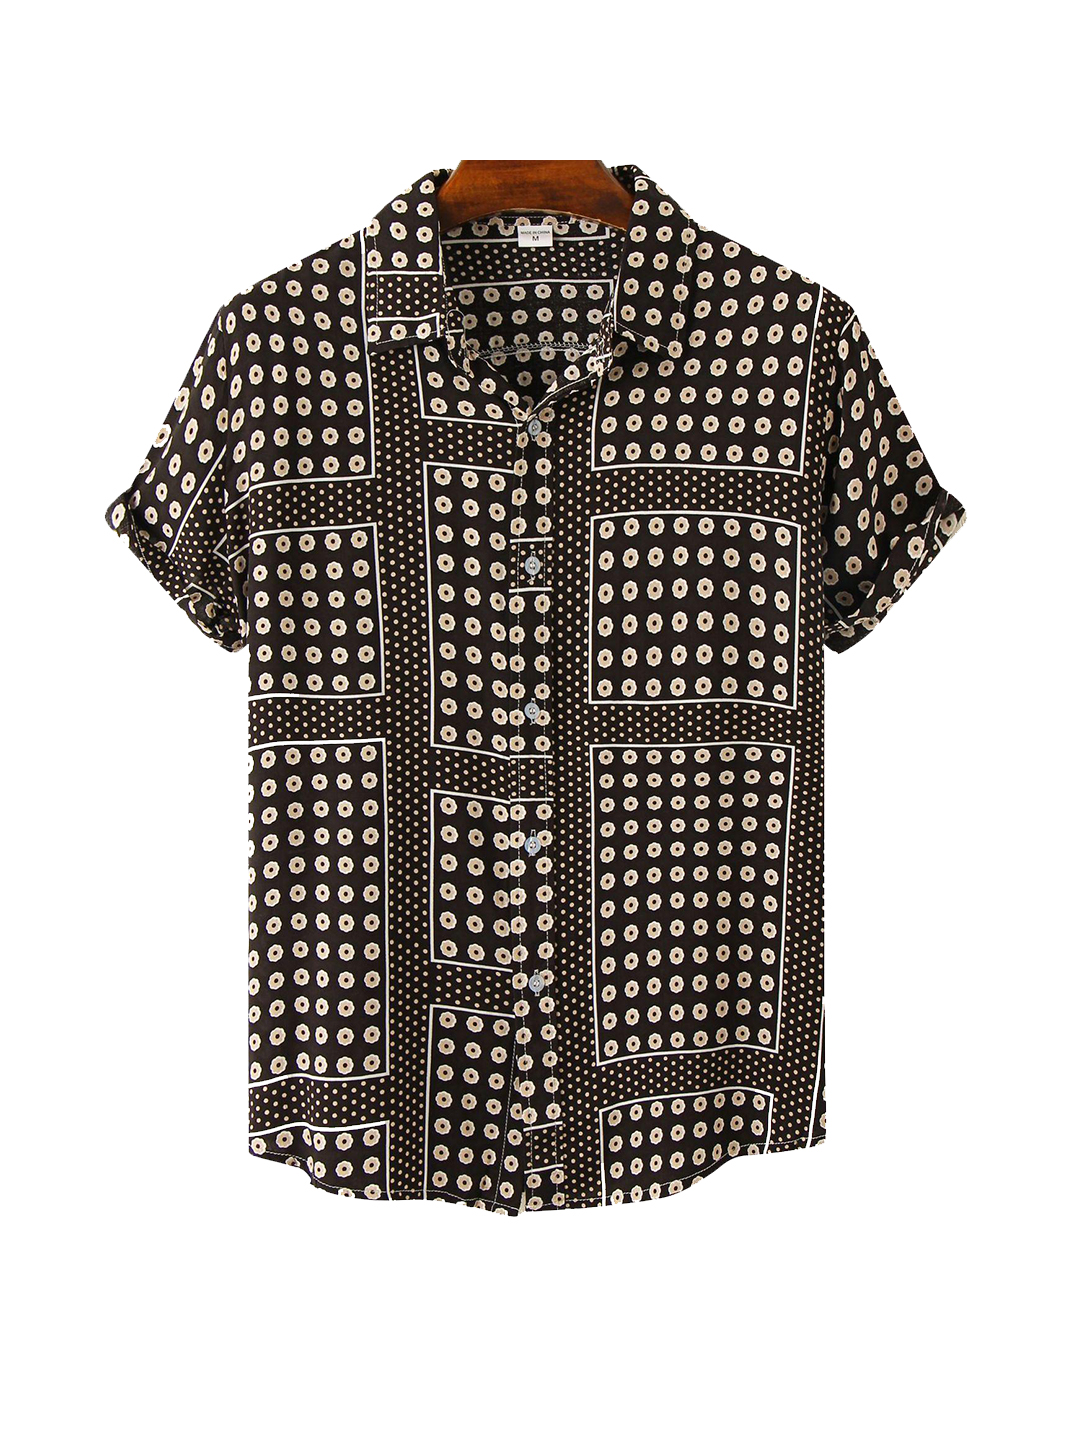 James Polka Dots Printing Short Sleeve Shirt-poisonstreetwear.com